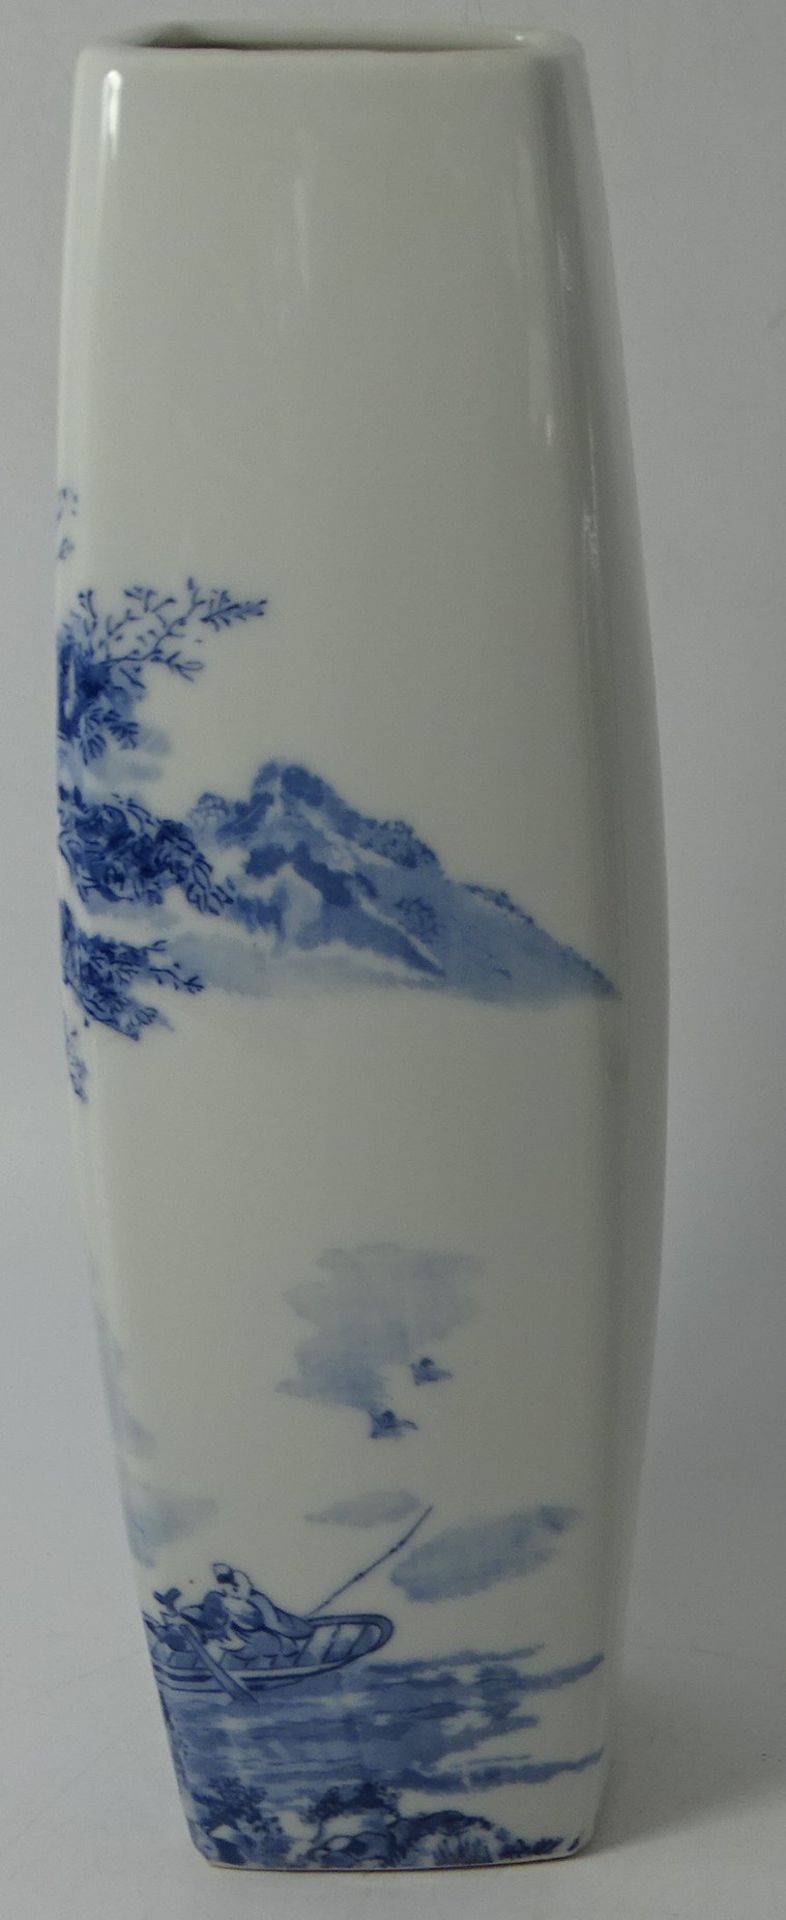 hohe schlanke China Vase mit Blaumalerei, gemarkt, H-29 cm - Image 3 of 6